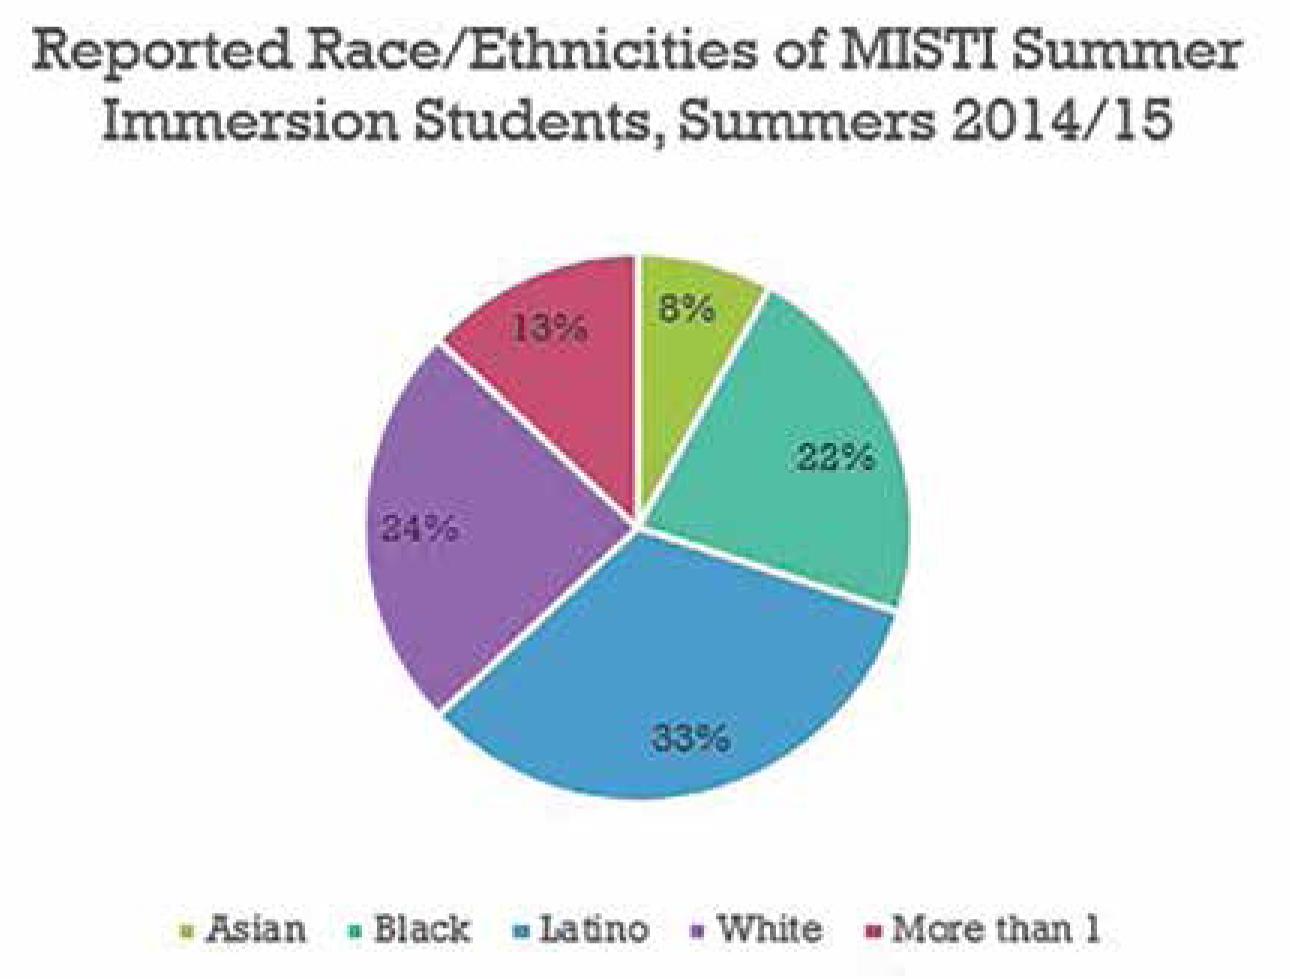 Demographics for Mercy College Intensive STEM Teacher Initiative (MISTI) Summer Immersion Camp Participants.